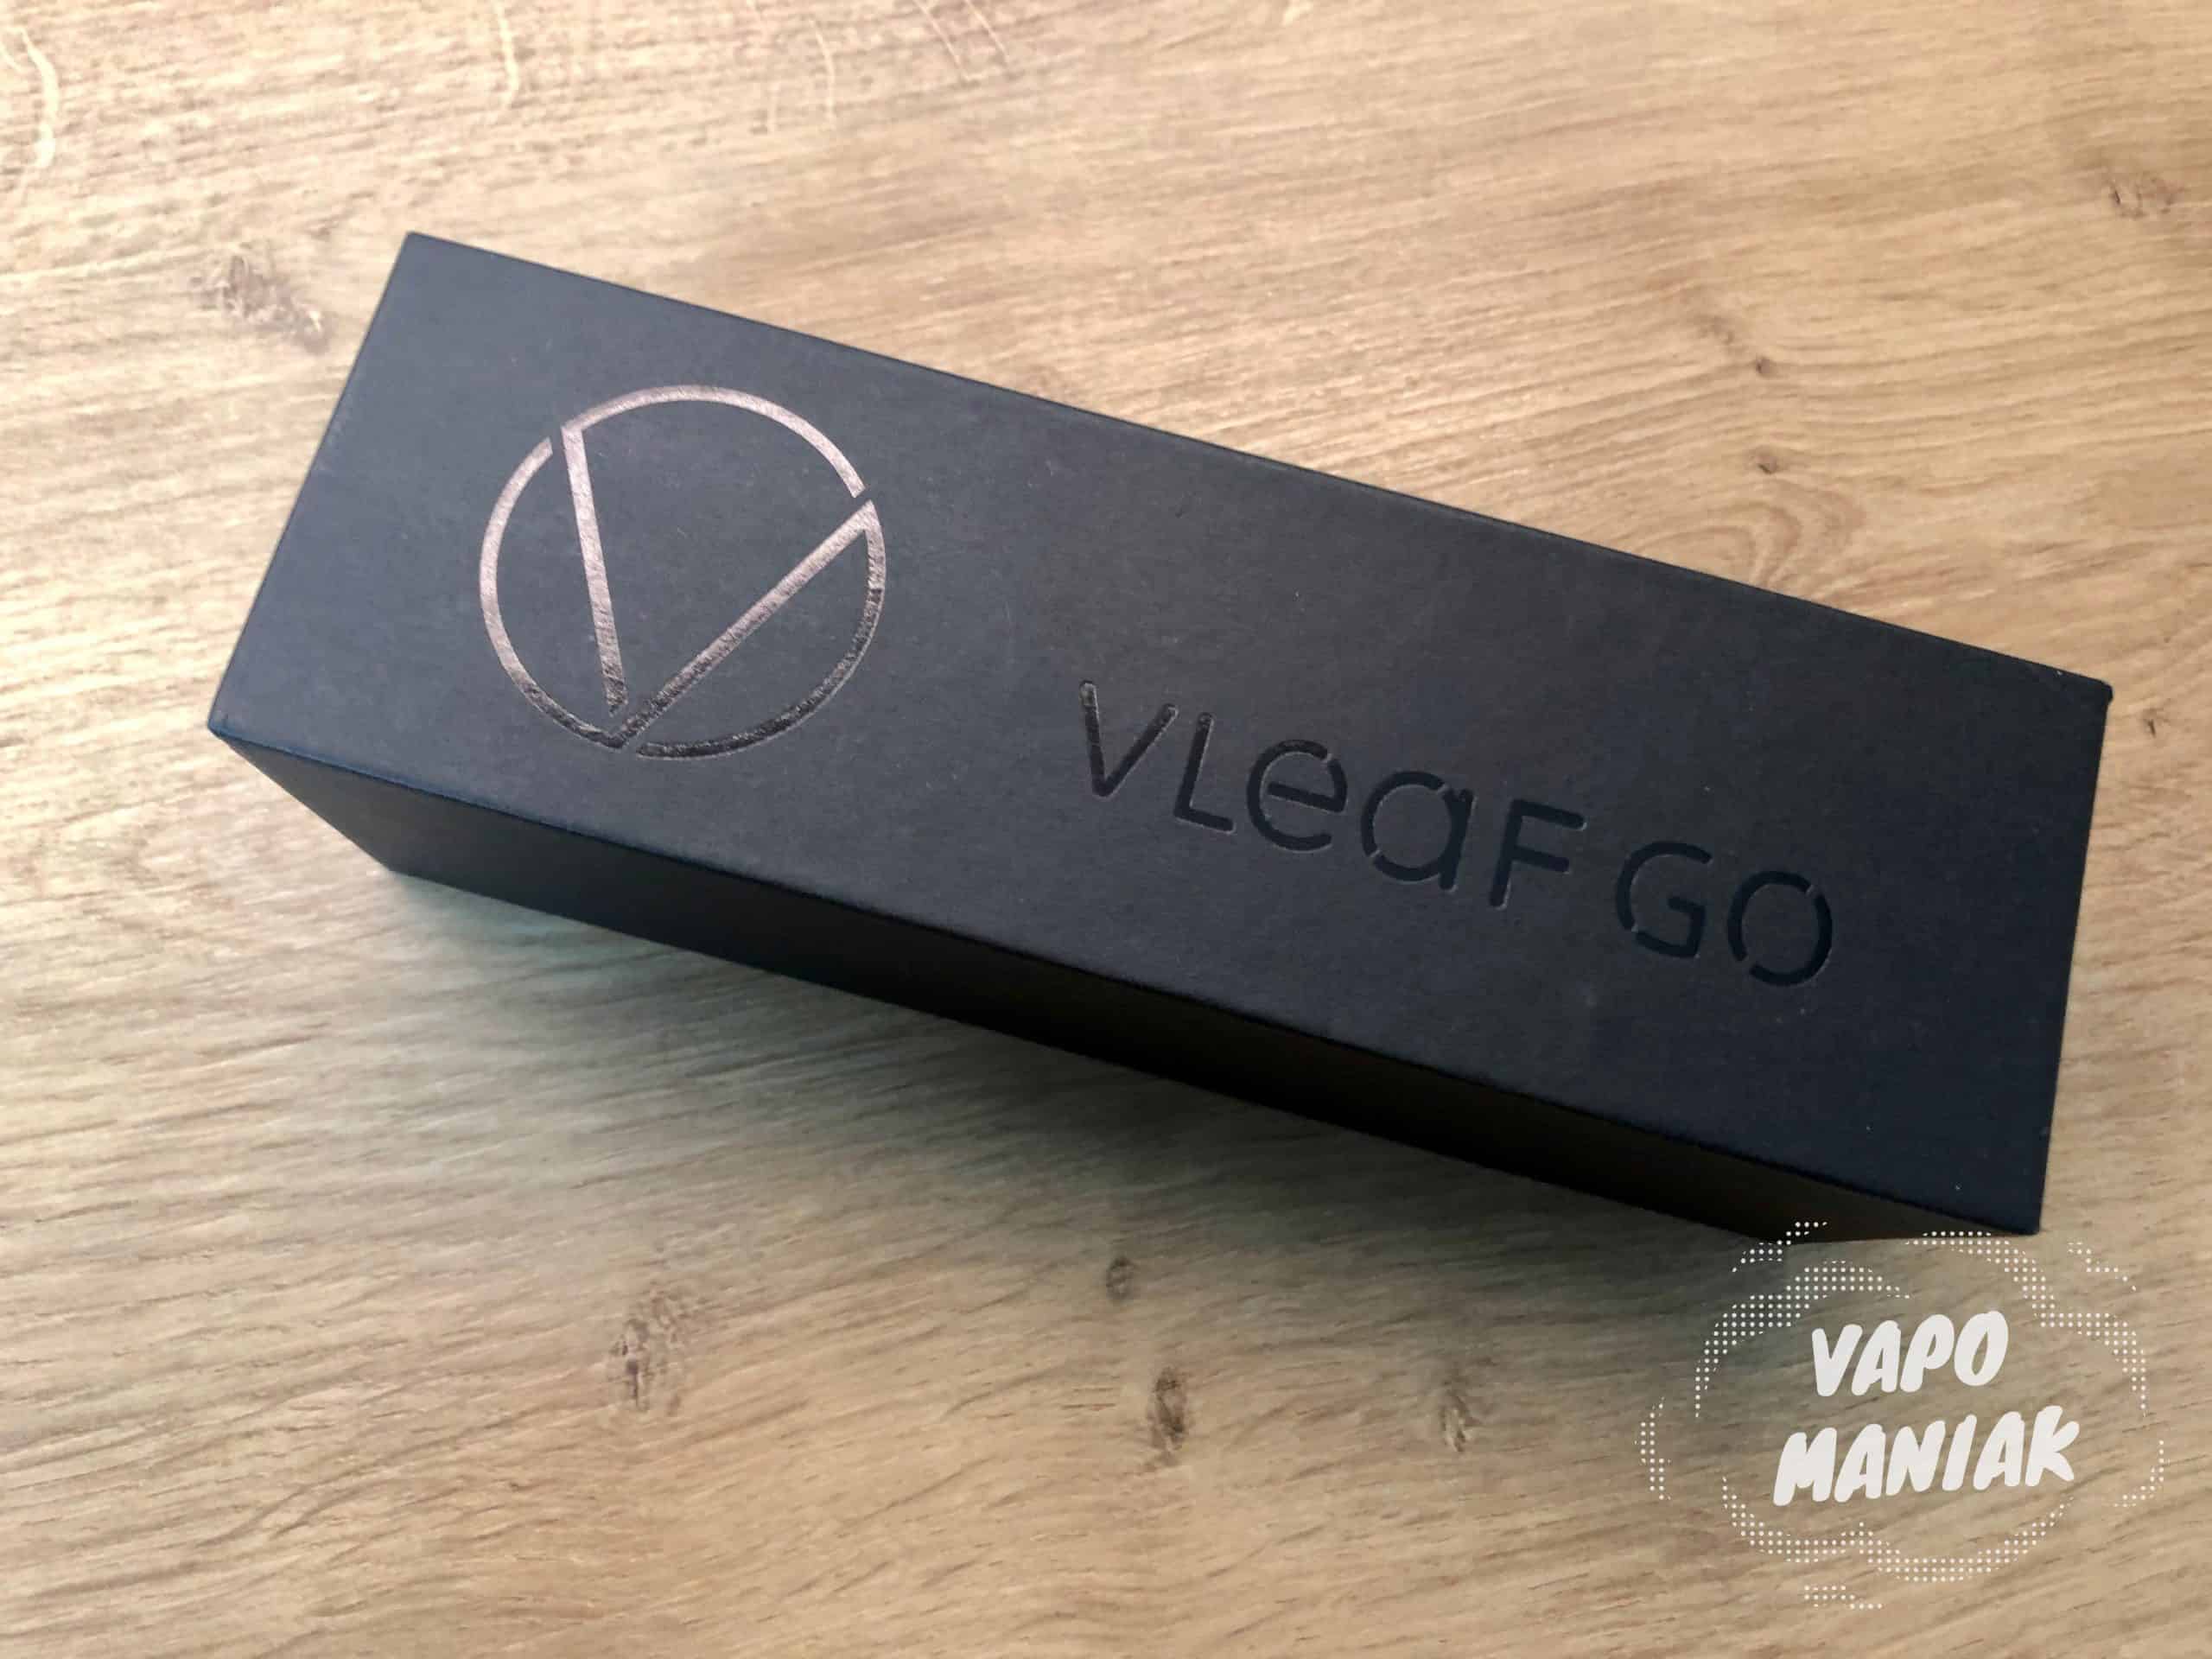 Pudełko Vivant VLeaF Go jest bardzo kompaktowe.